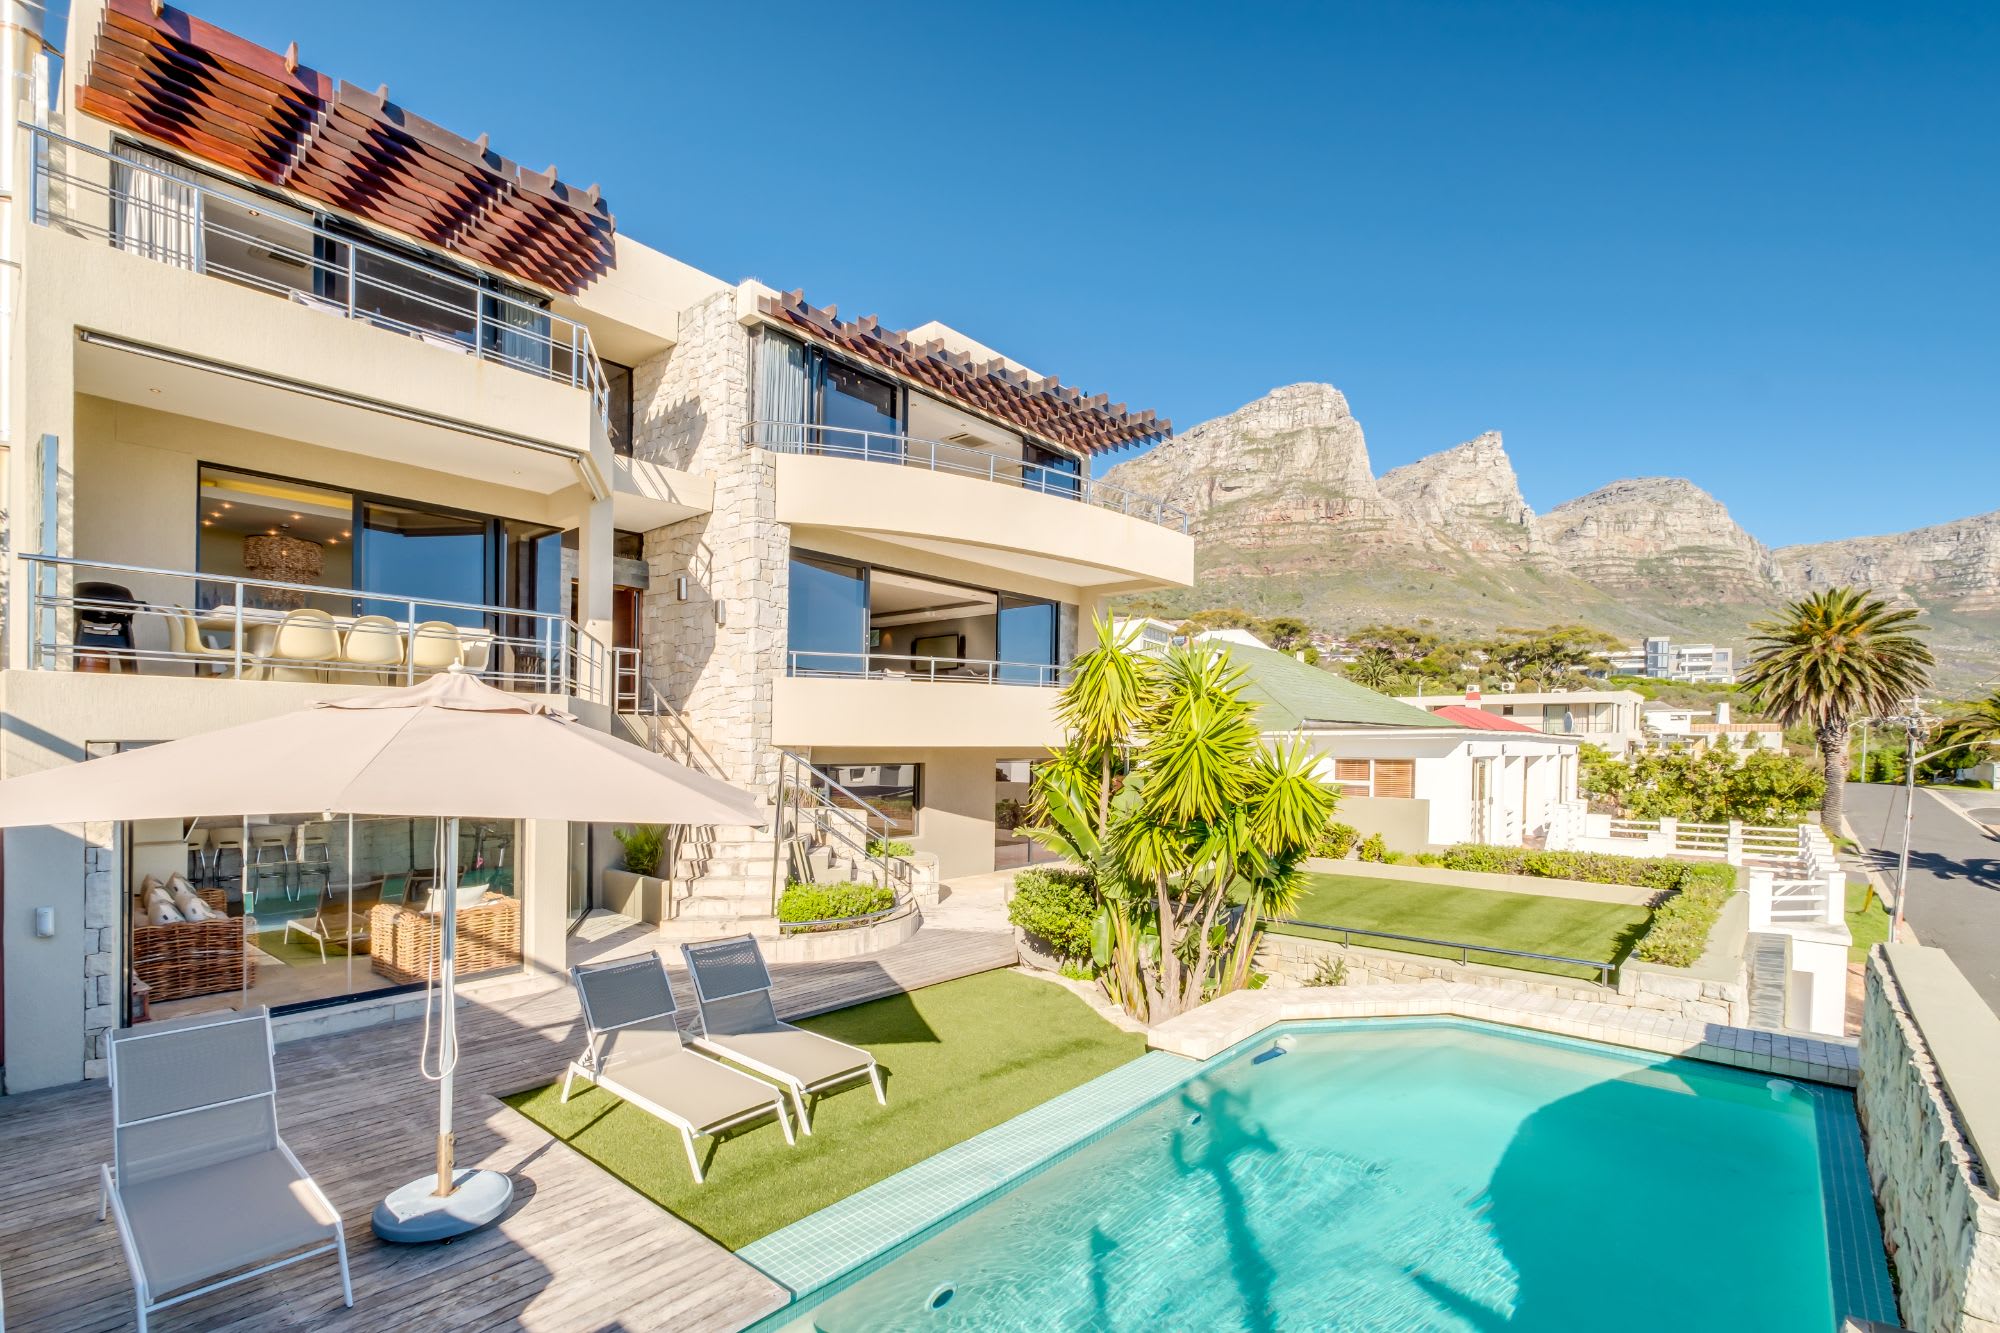 Similar Property Multi Level Family Villa w Private Pool Views Lions Crest